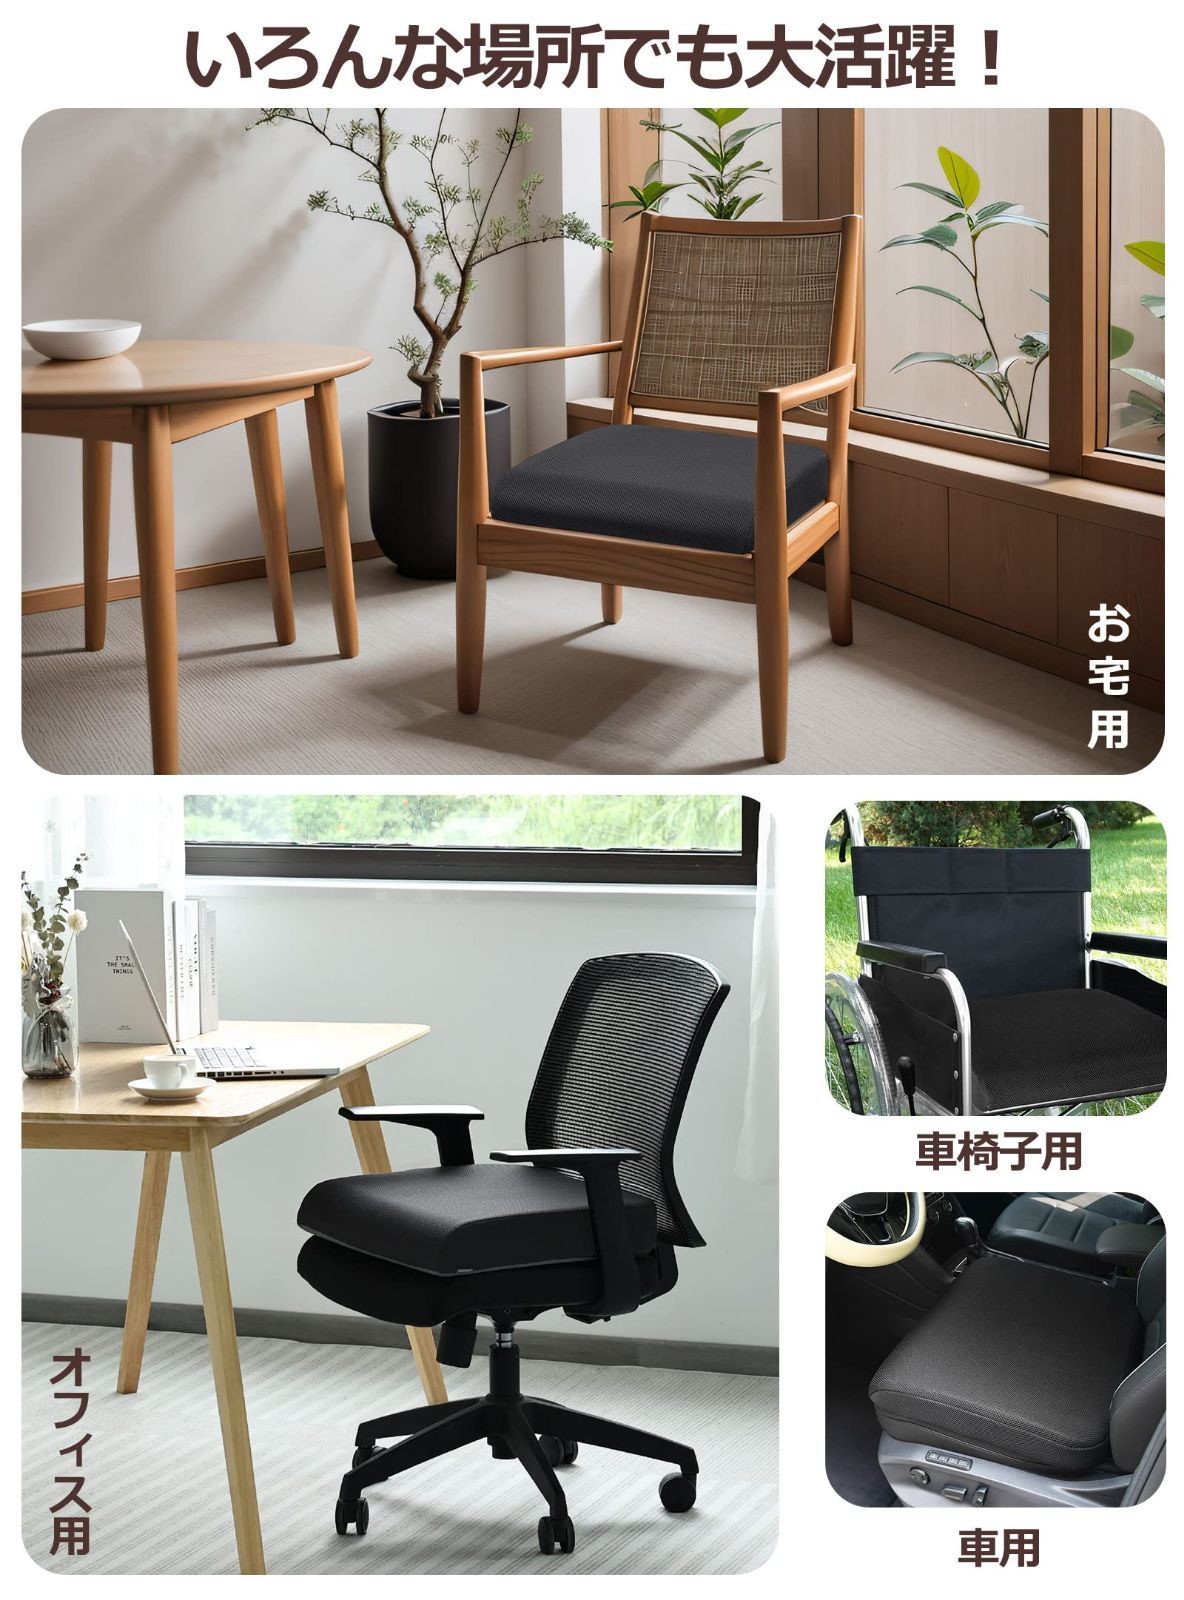 Shinnwa 高反発 座布団 クッション 椅子用 特許取得 バネ入り ウレタン